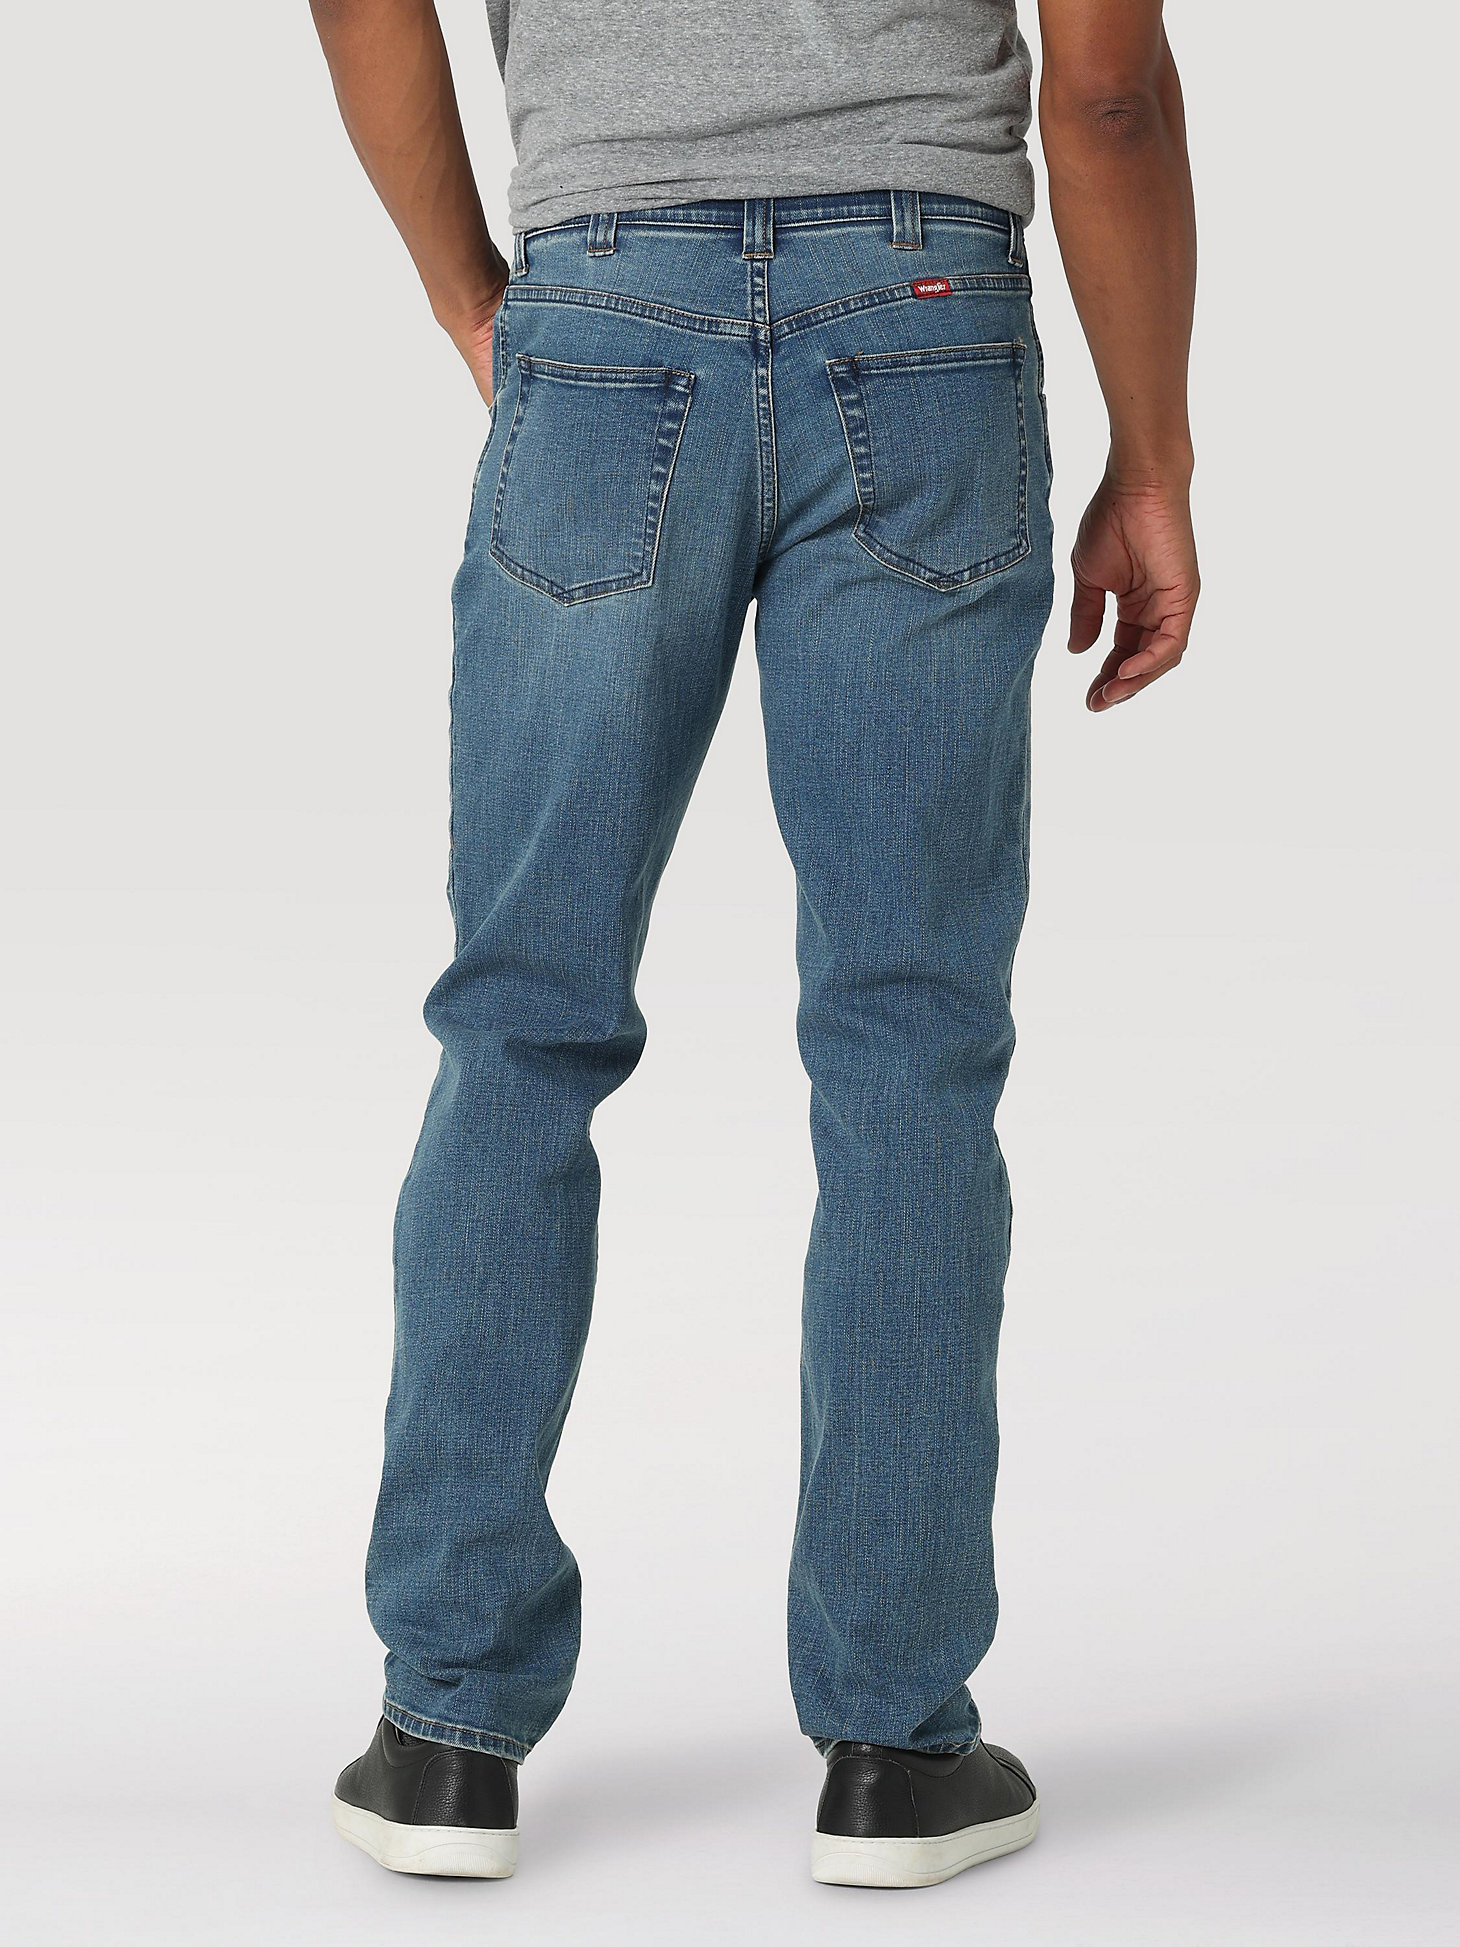 Men's Ultra Flex Slim Fit Jean in Jett alternative view 1